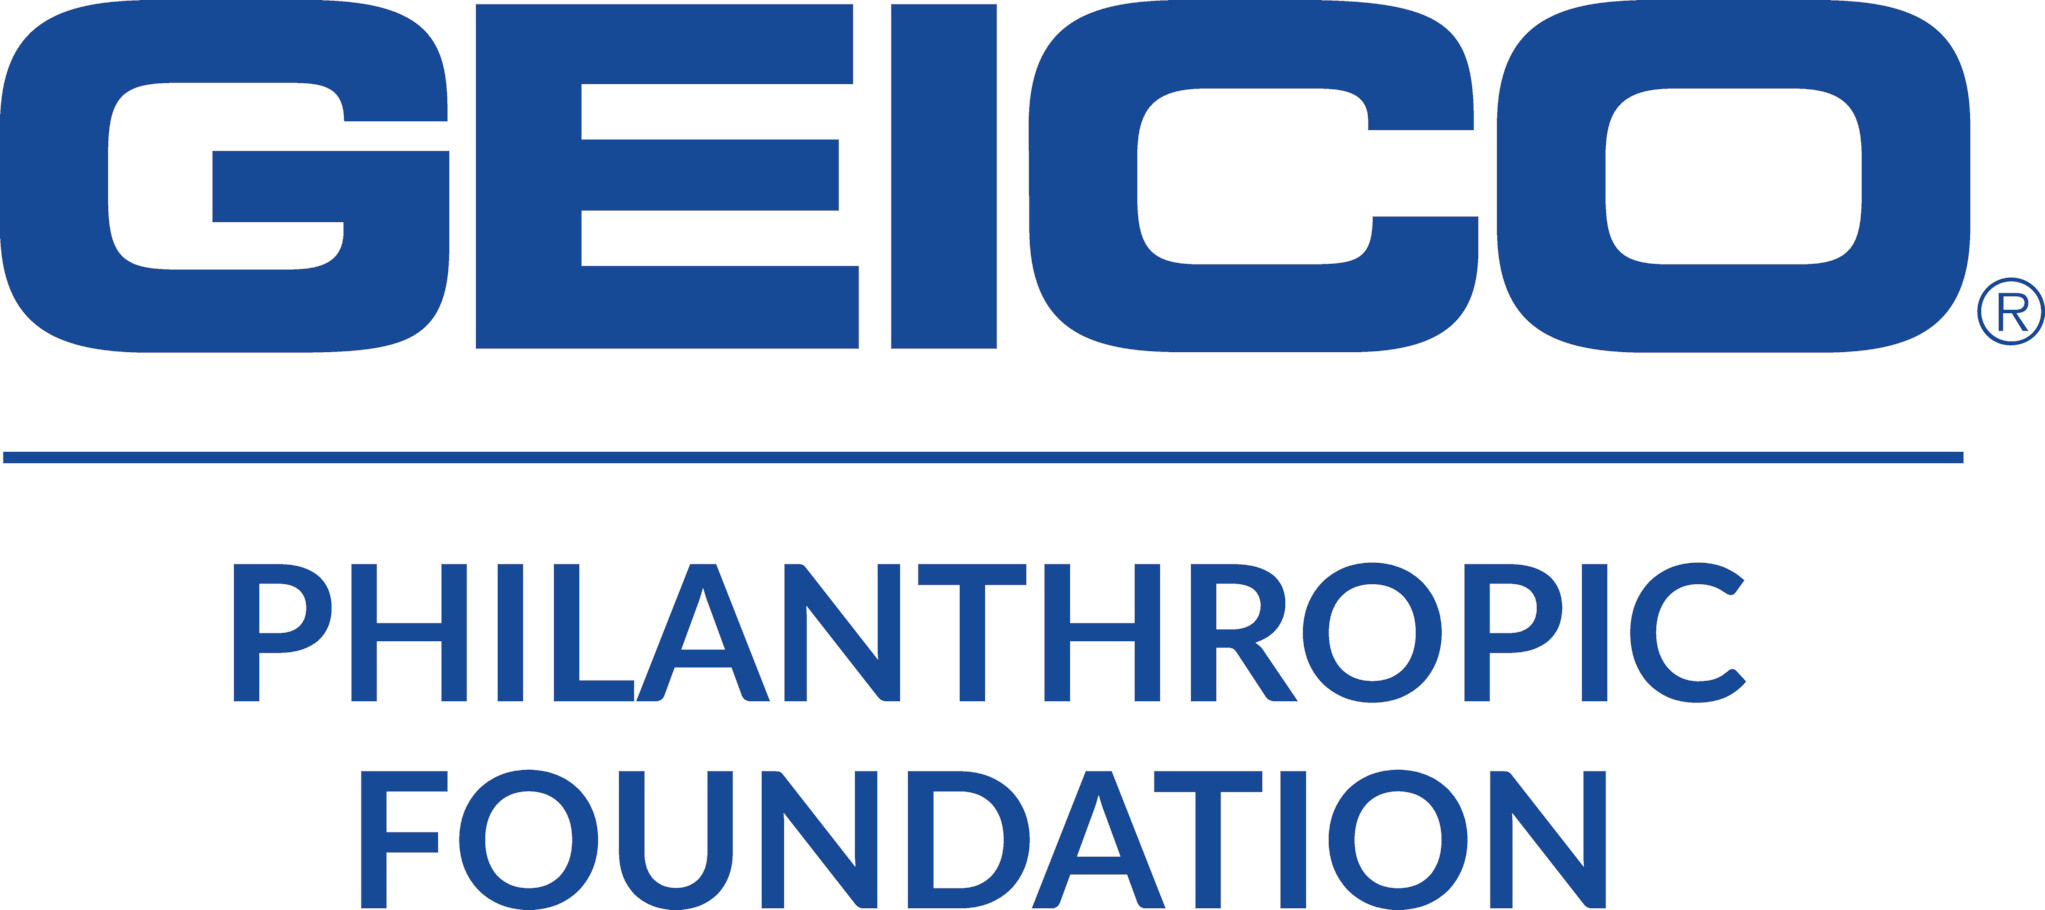  GEICO Philanthropic Foundation. 